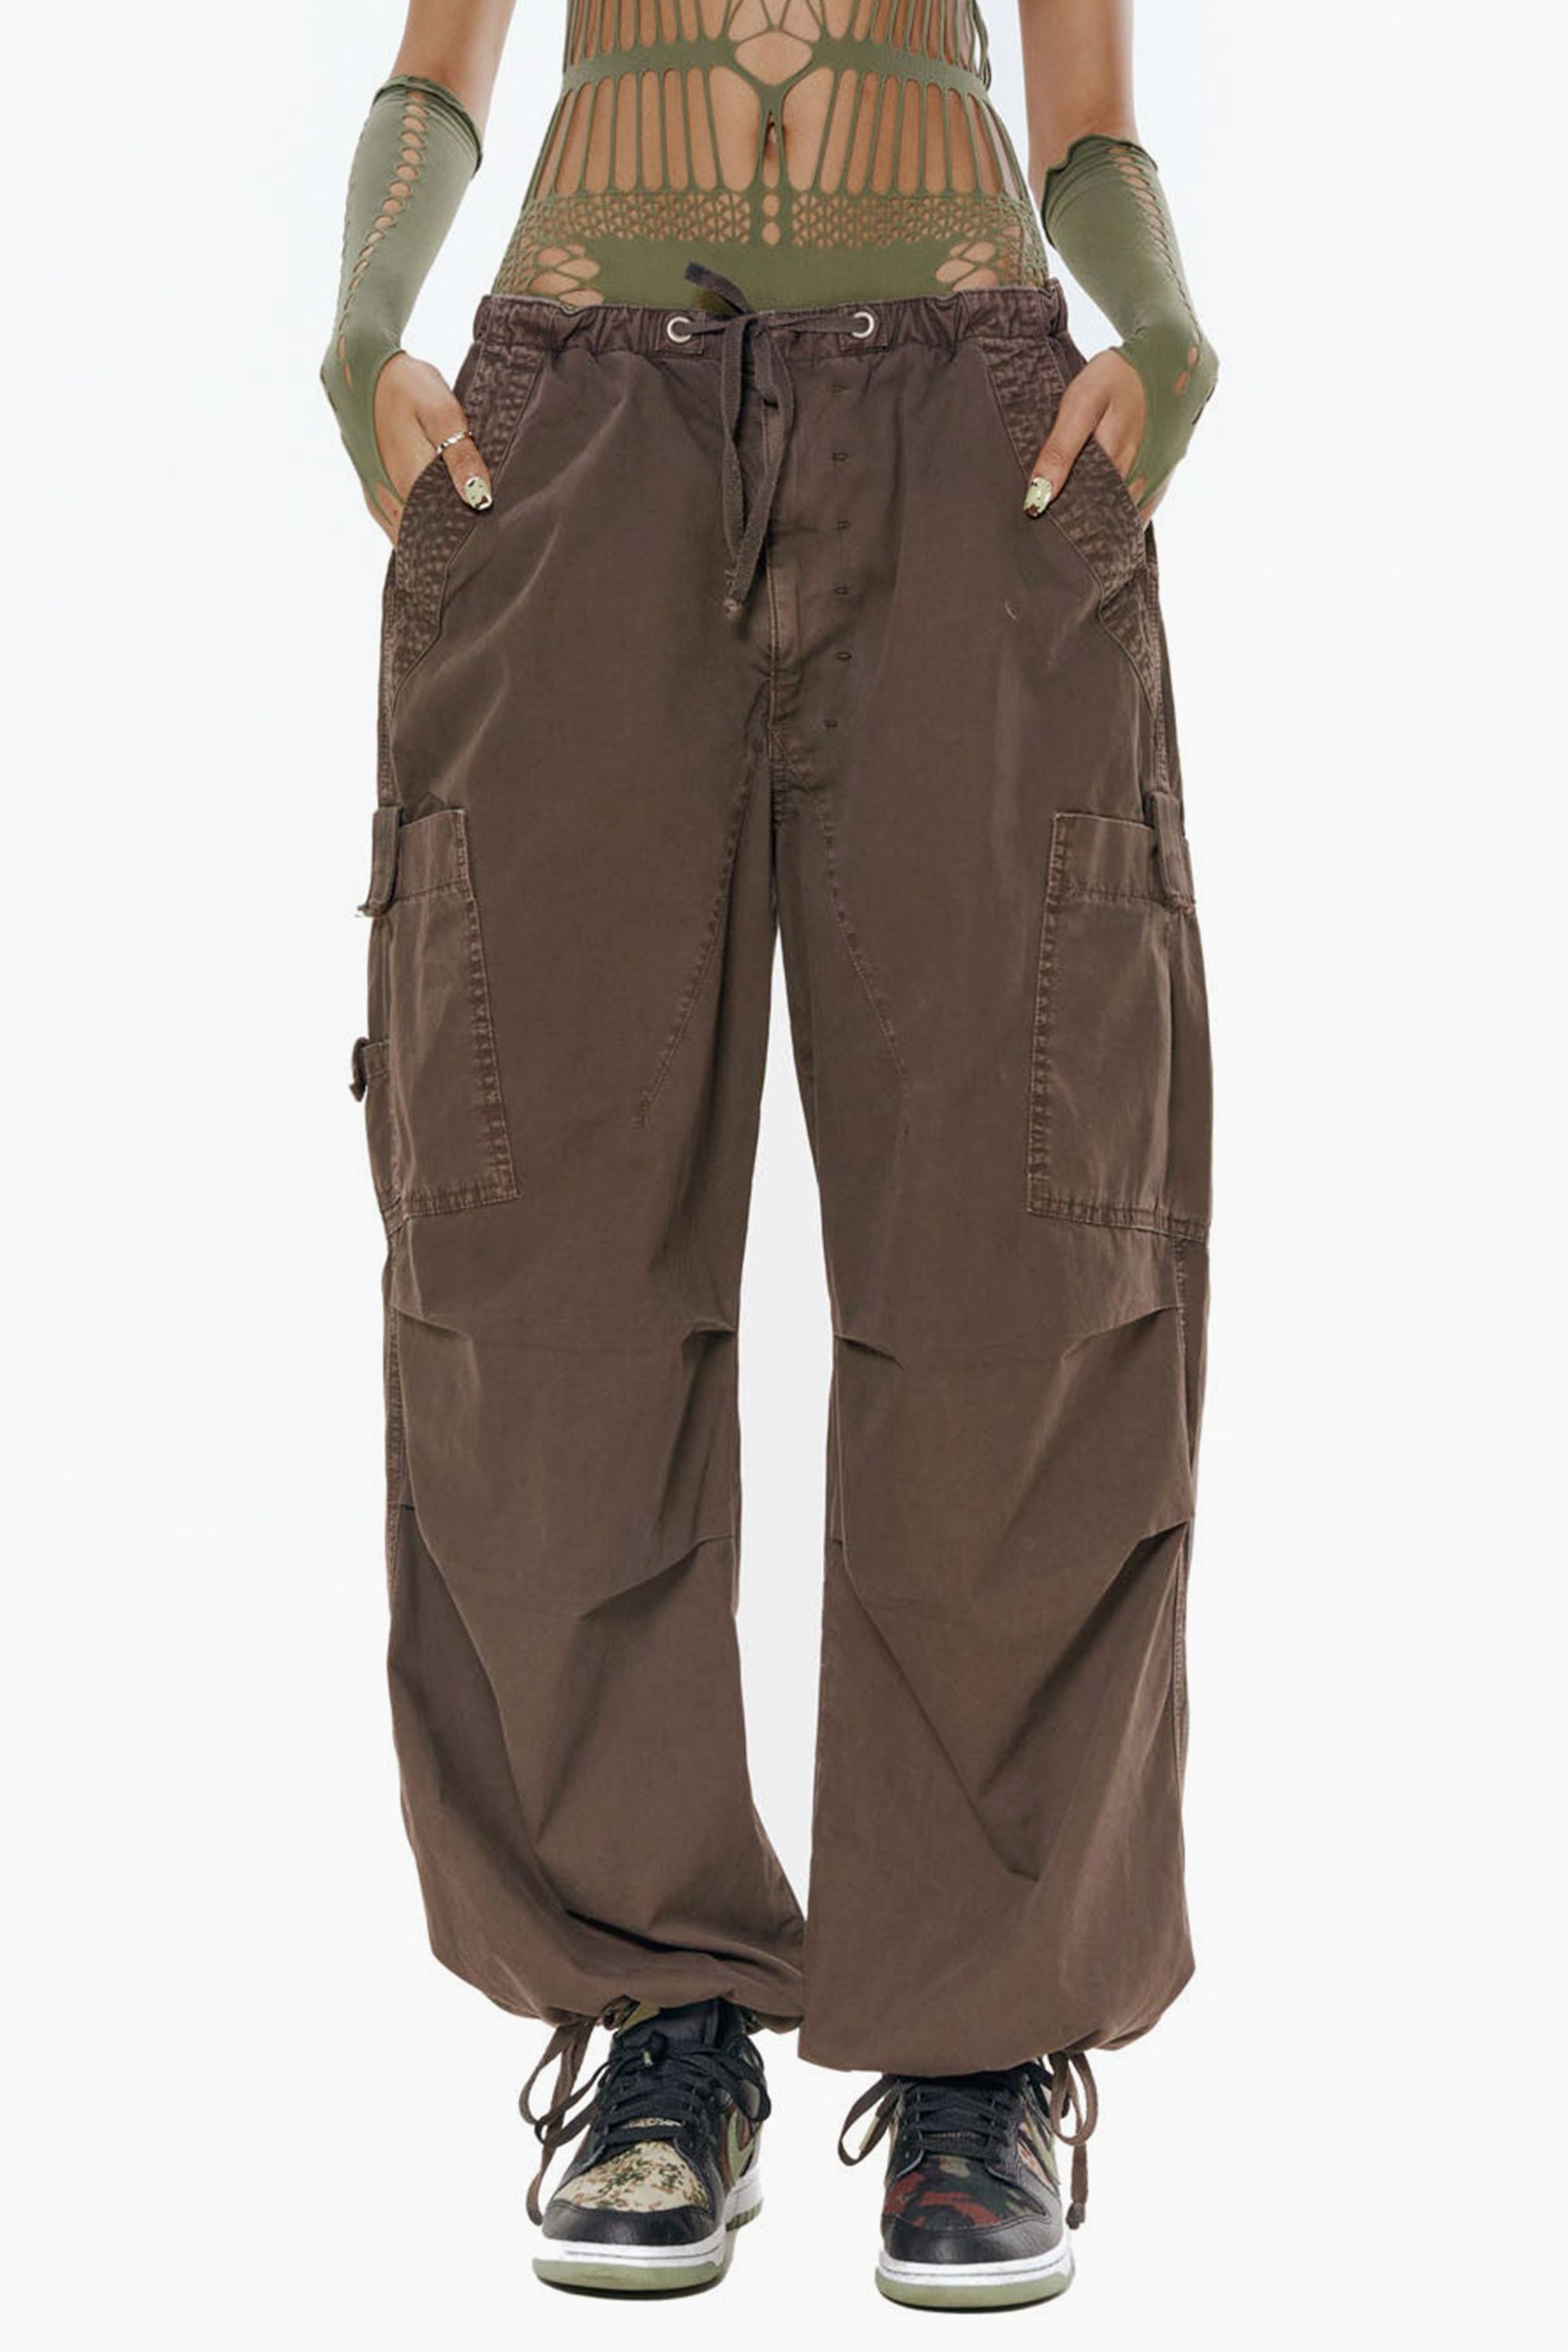 discount 95% Springfield slacks WOMEN FASHION Trousers Slacks Brown S 